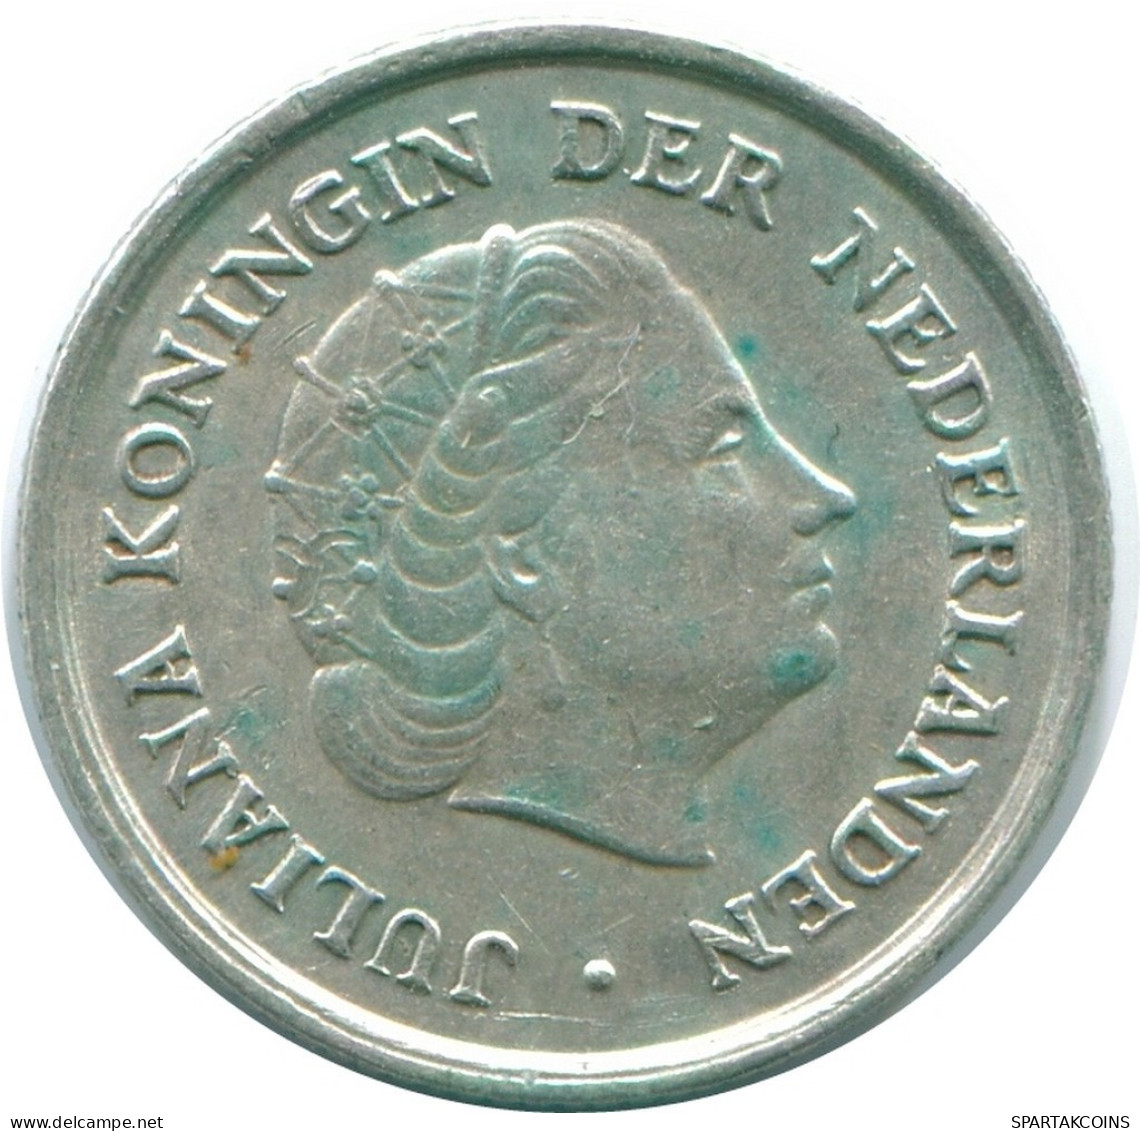 1/10 GULDEN 1966 NIEDERLÄNDISCHE ANTILLEN SILBER Koloniale Münze #NL12910.3.D.A - Netherlands Antilles